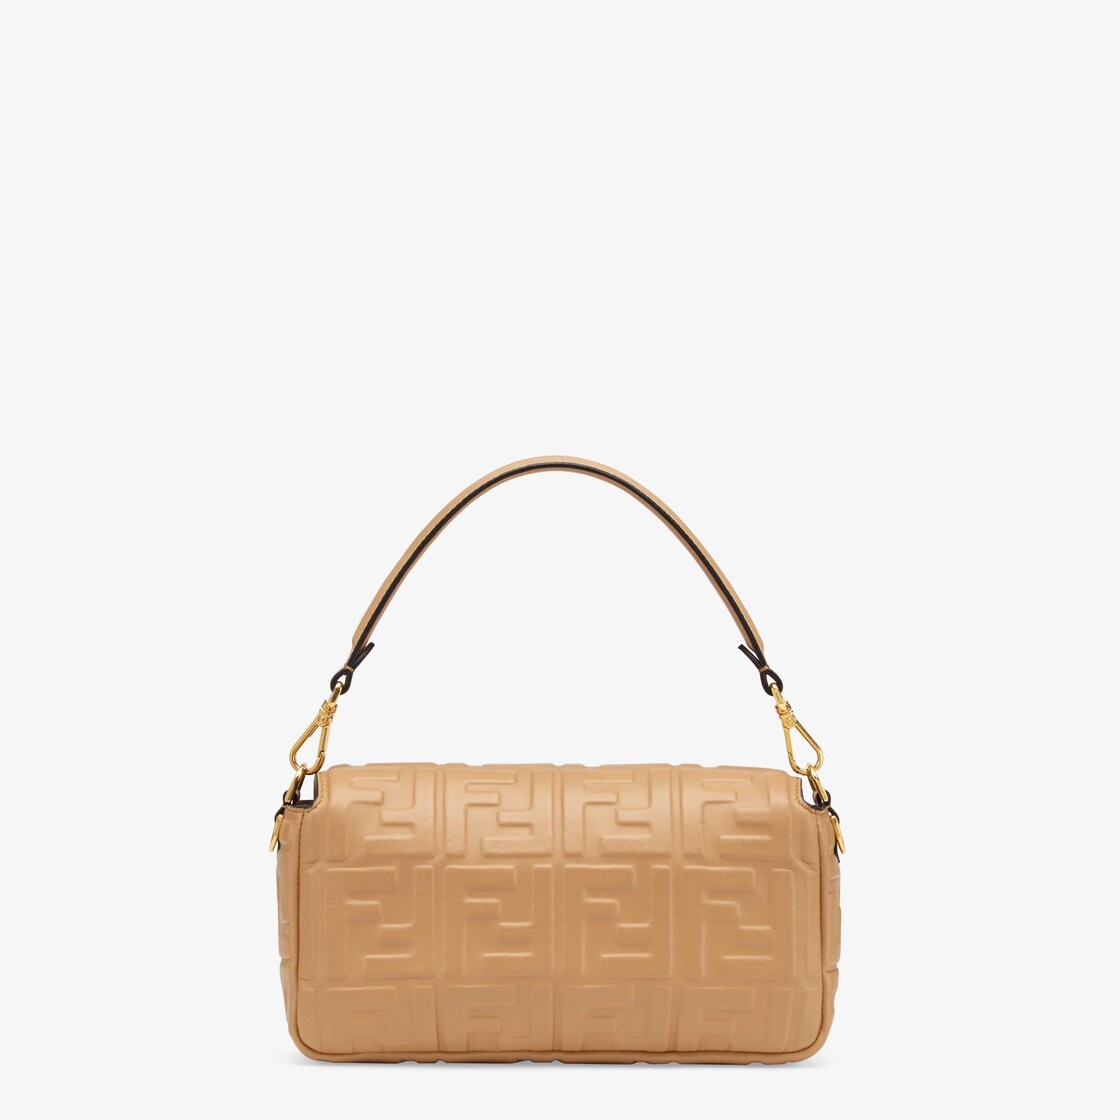 Beige leather bag - 3